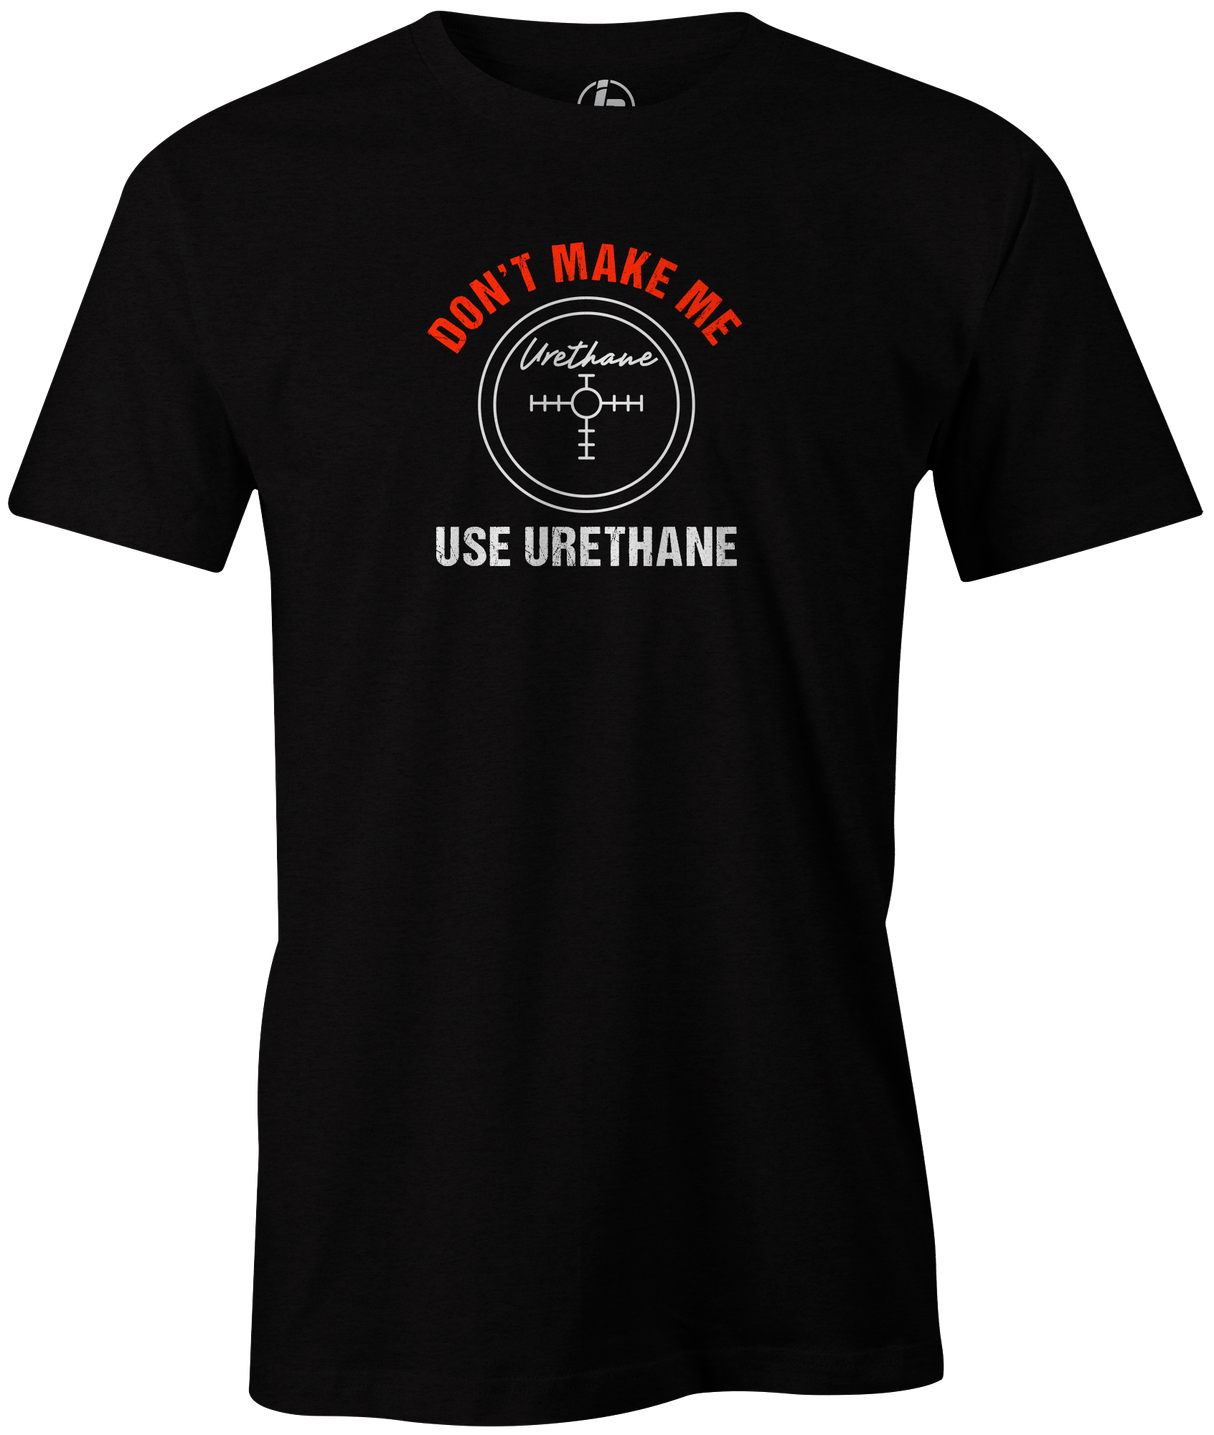 Don't Make Me Use Urethane Men's T-shirt, Black, Bowling, funny, cool, awesome, tee, tee-shirt, tee shirt, tshirt.